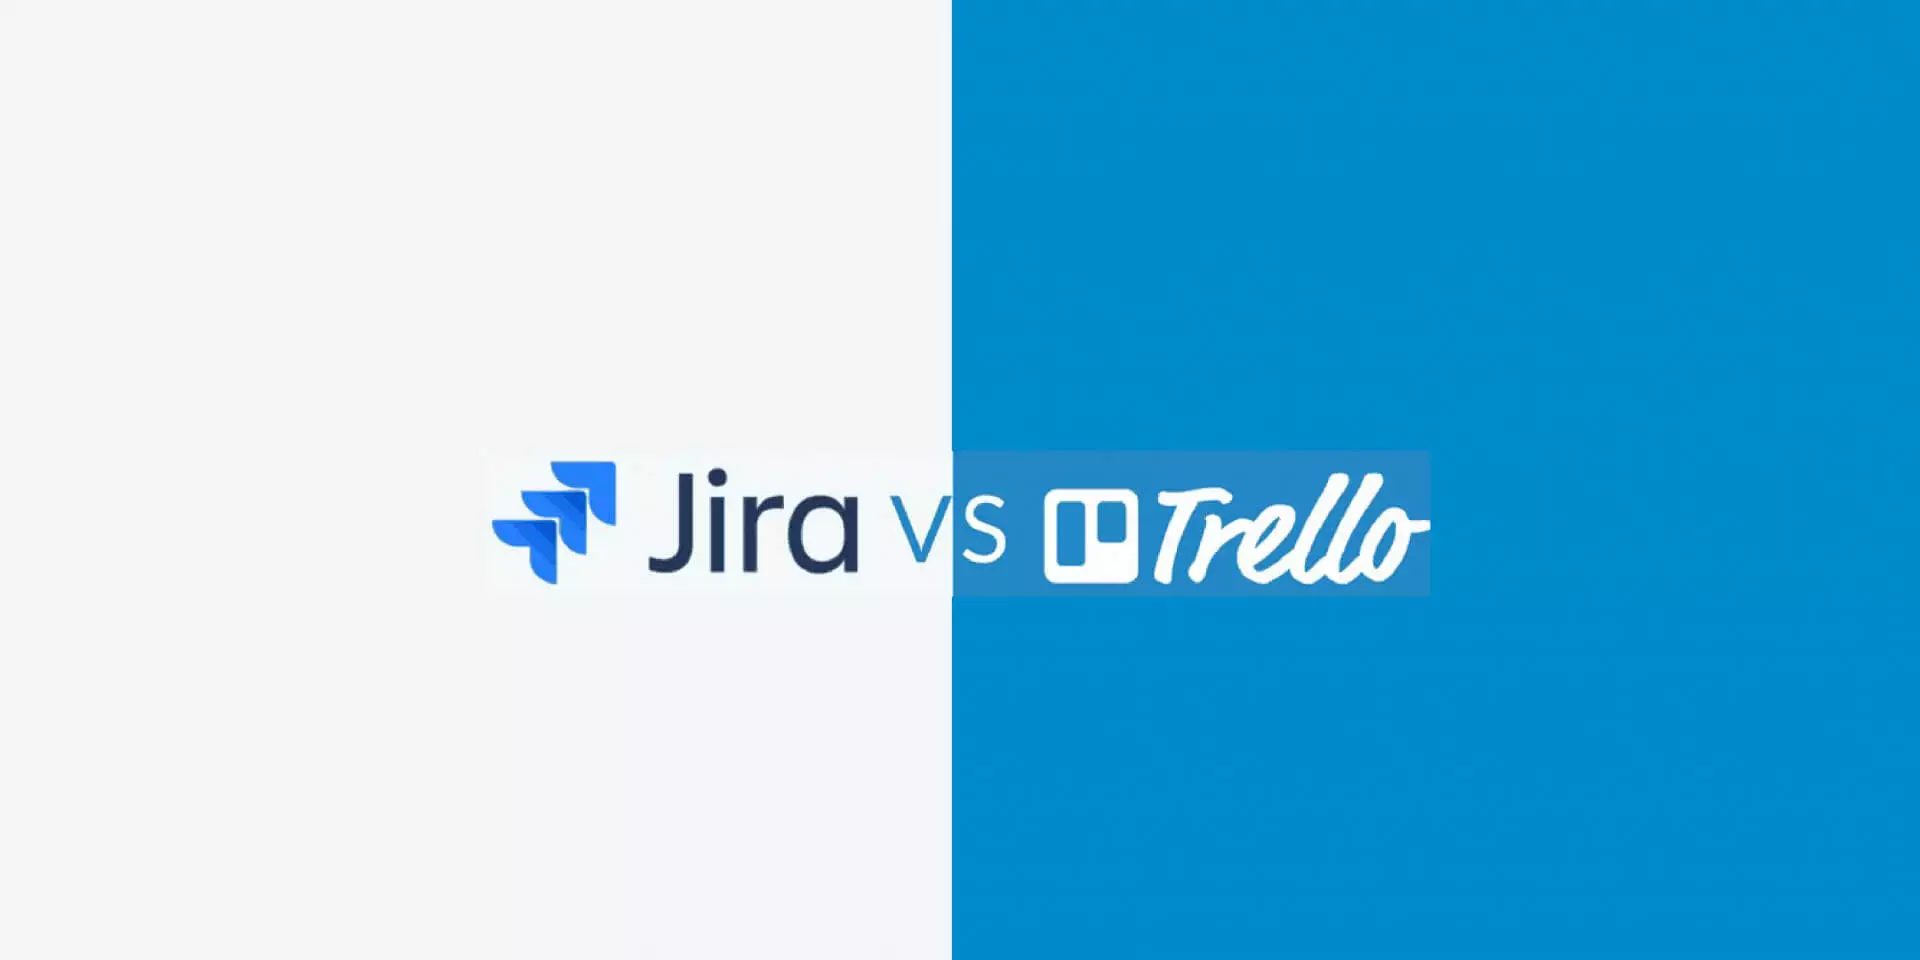 Trello vs Jira – A Developer's View of Project Management Tools